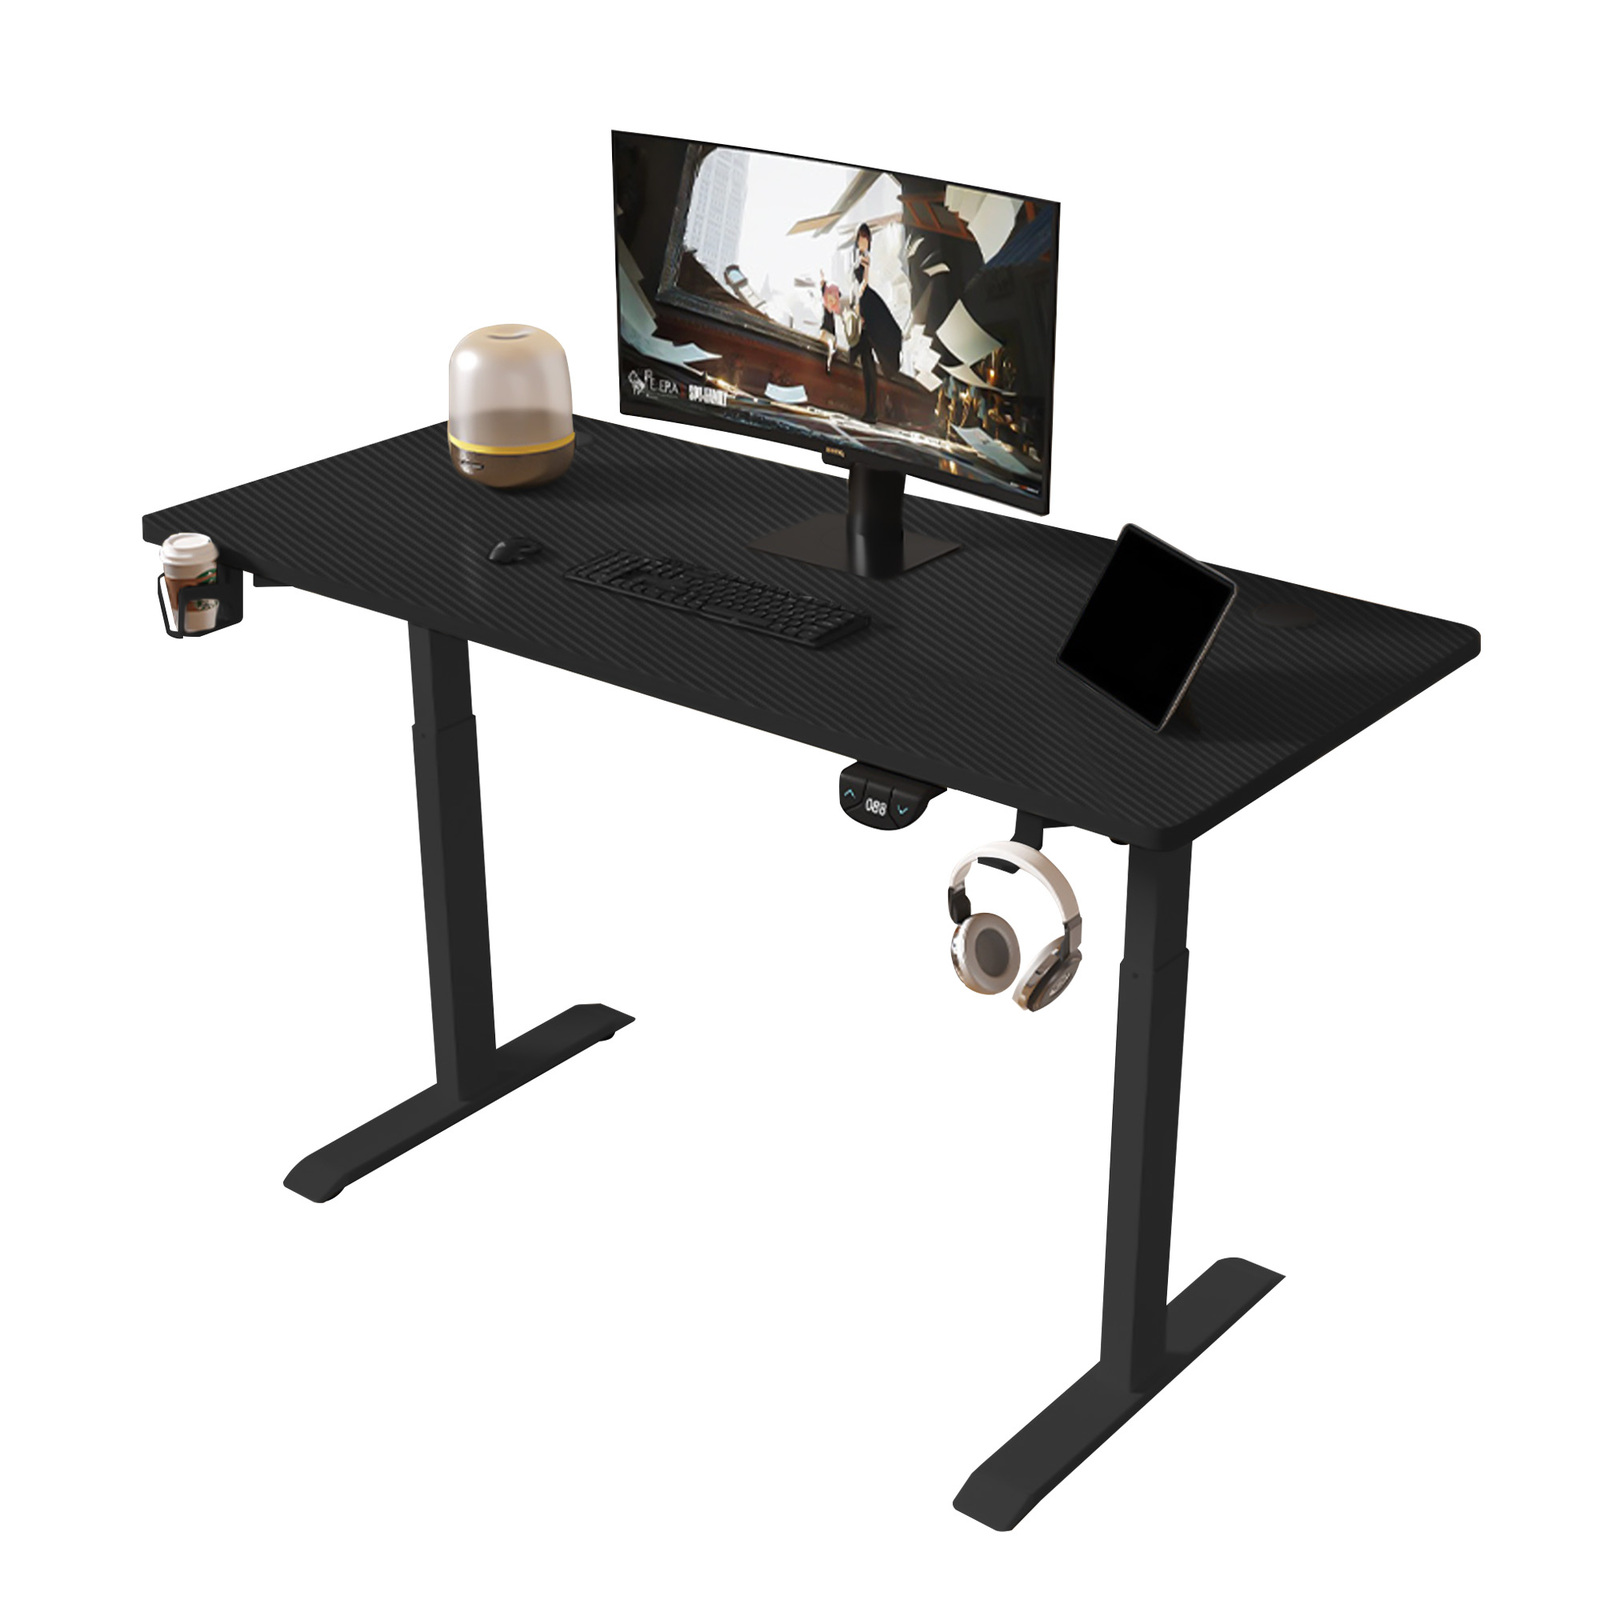 140cm Gaming Desk Single Motor Frame Leg with Cup and Headphone Holder Black